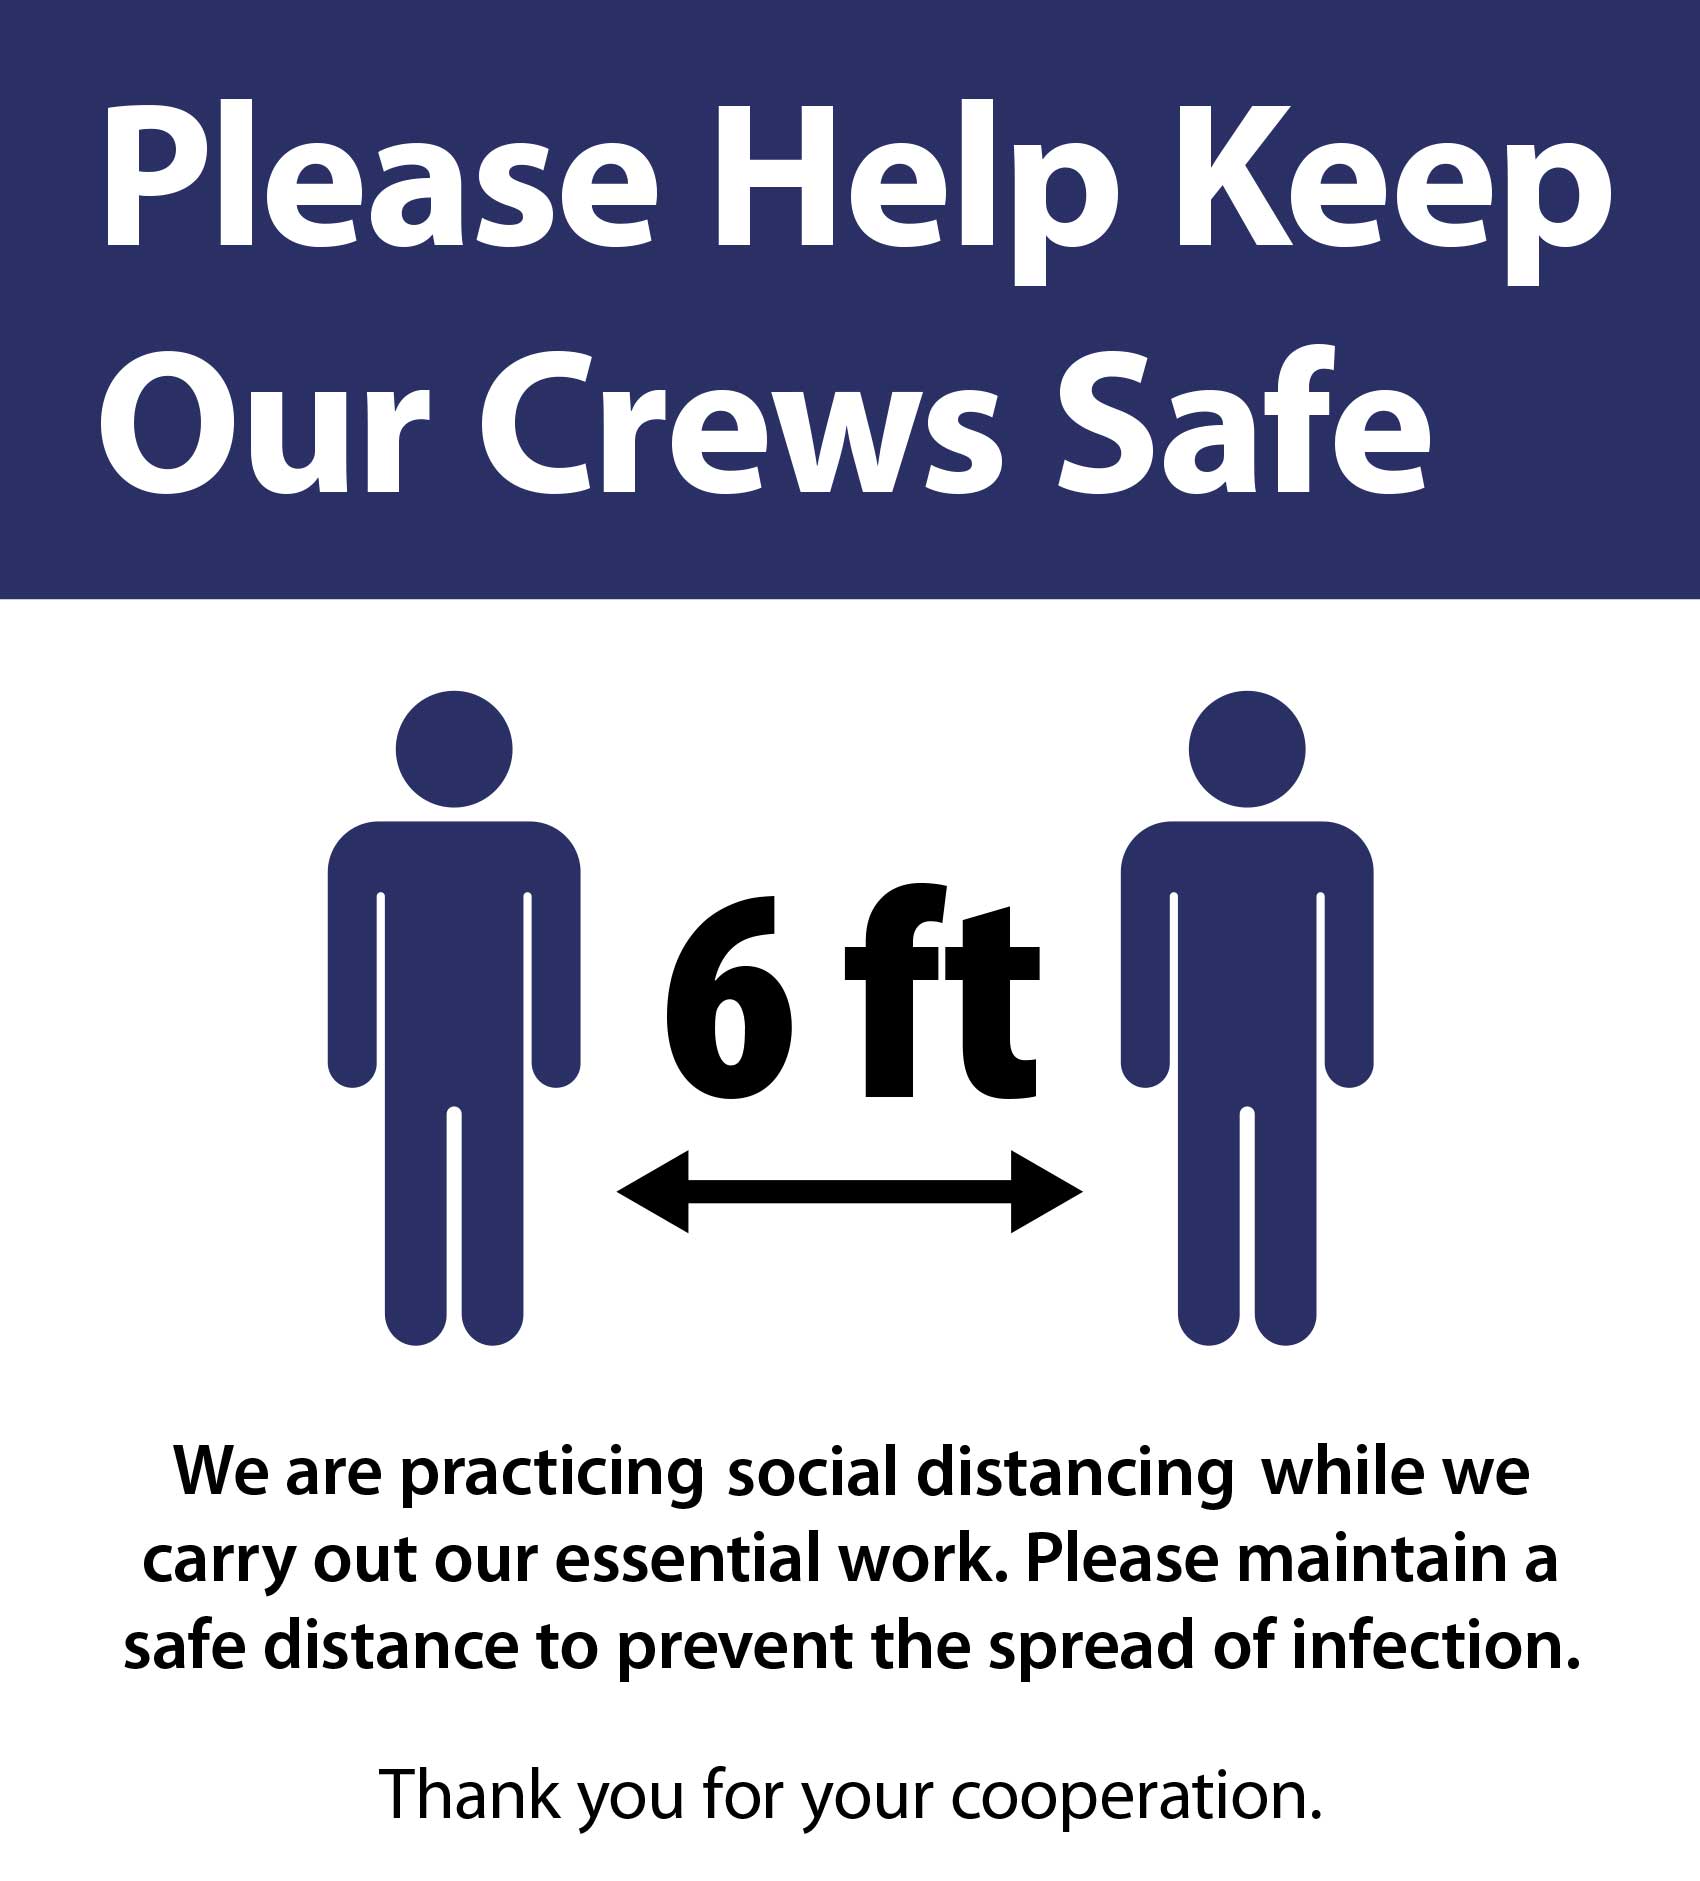 Please help keep our crews safe